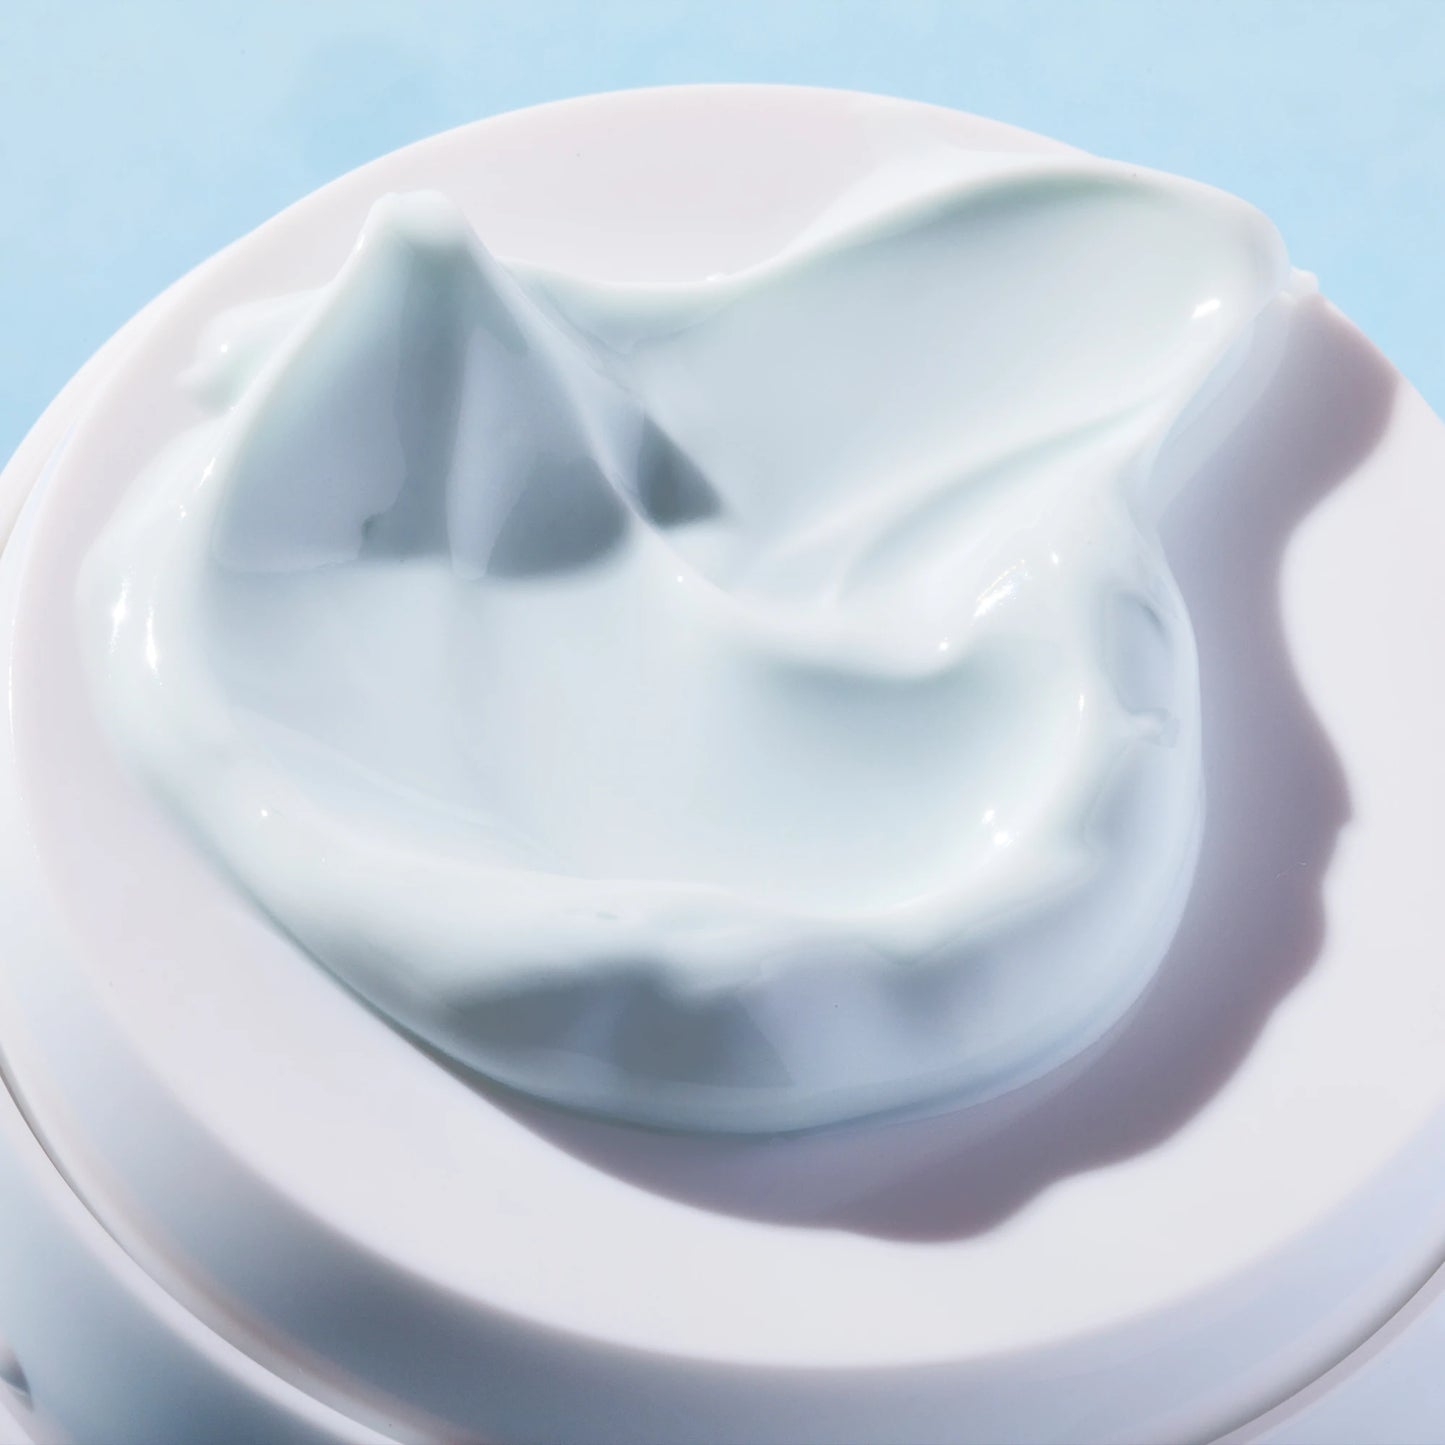 Refreshing Water Cream Organic Face Sunscreen SPF 50